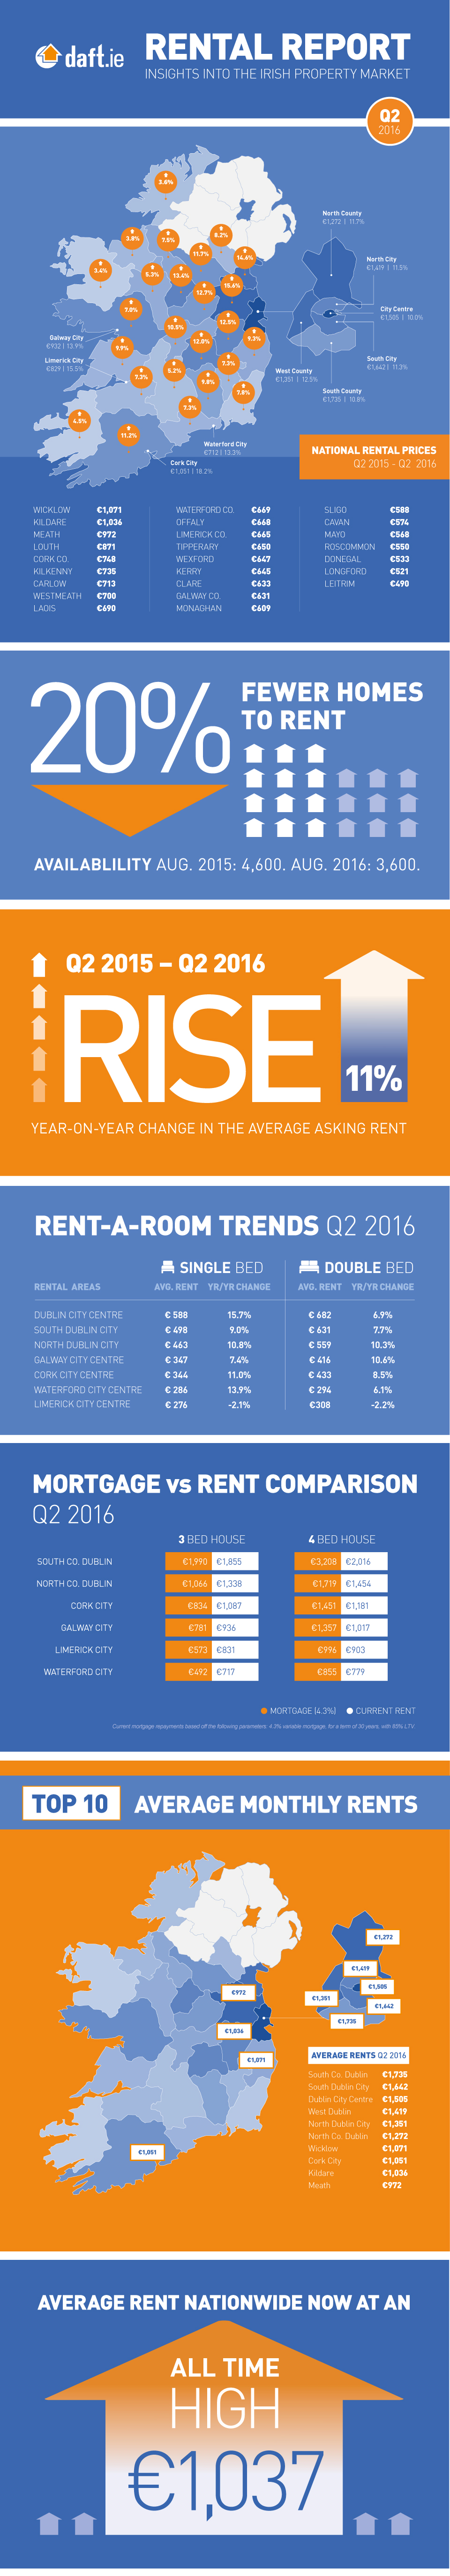 Daft.ie Rental Report: Q2 2016 Infographic